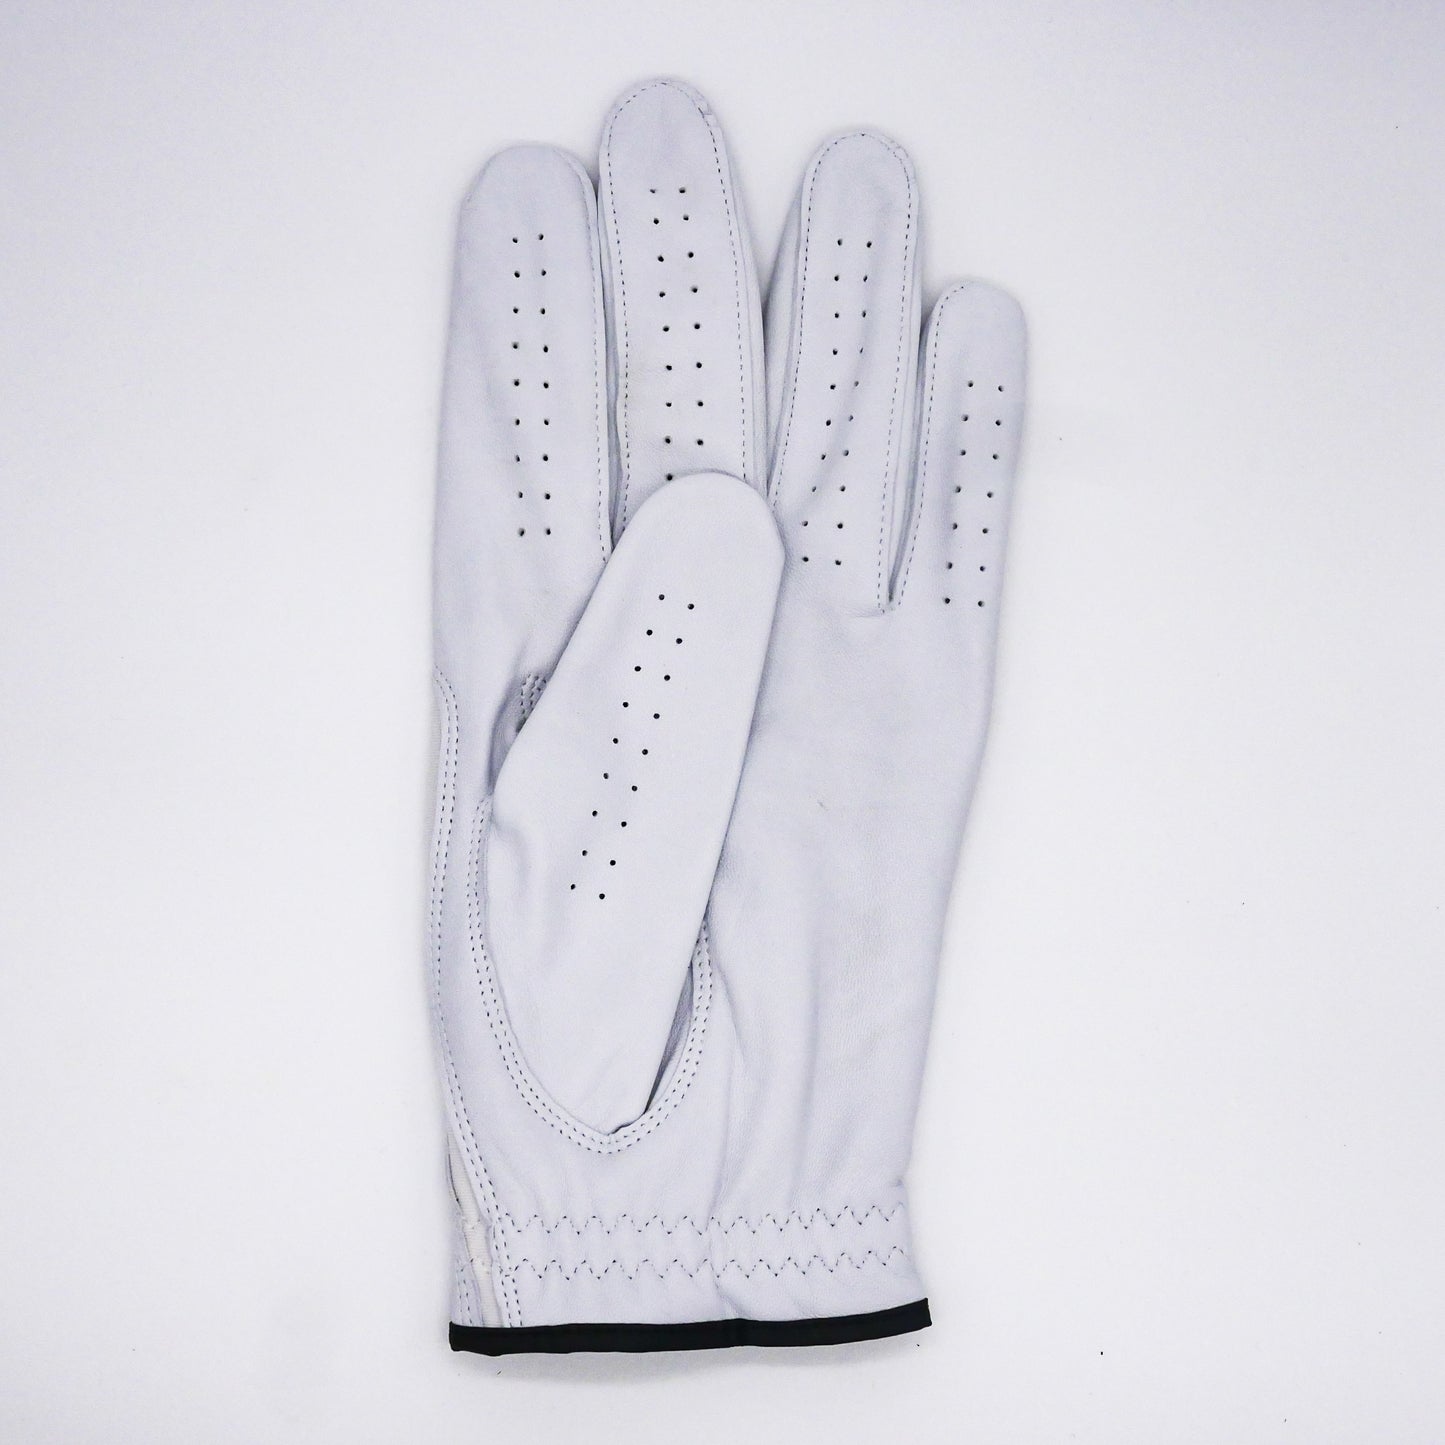 Winslow's Genesis Golf Glove